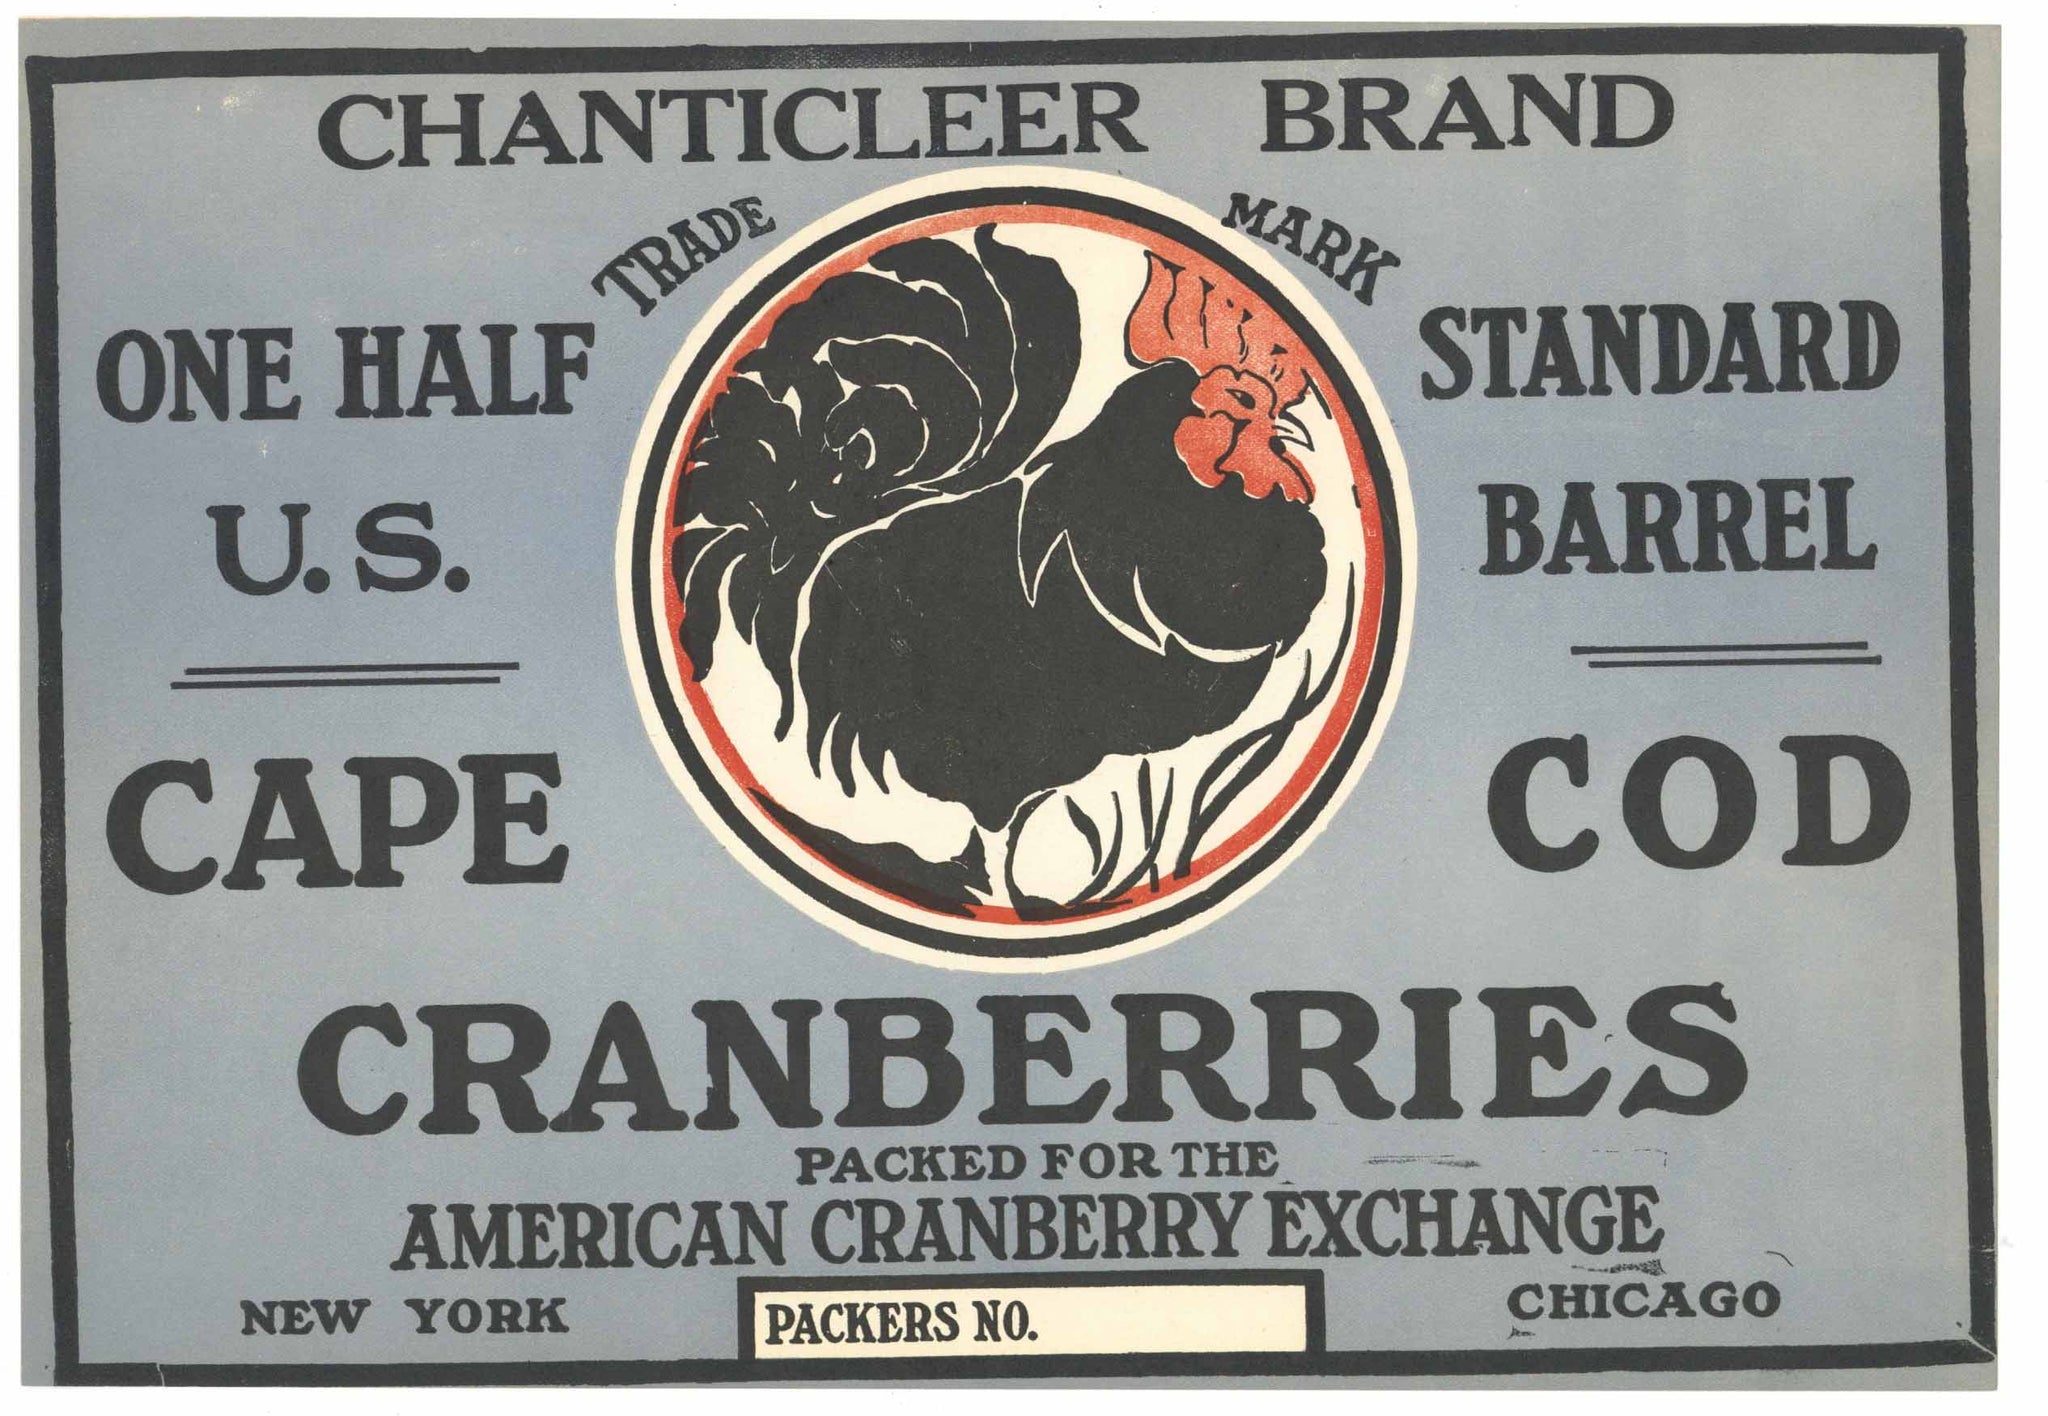 Chanticleer Brand Vintage Cape Cod Cranberry Crate Label, 1/2